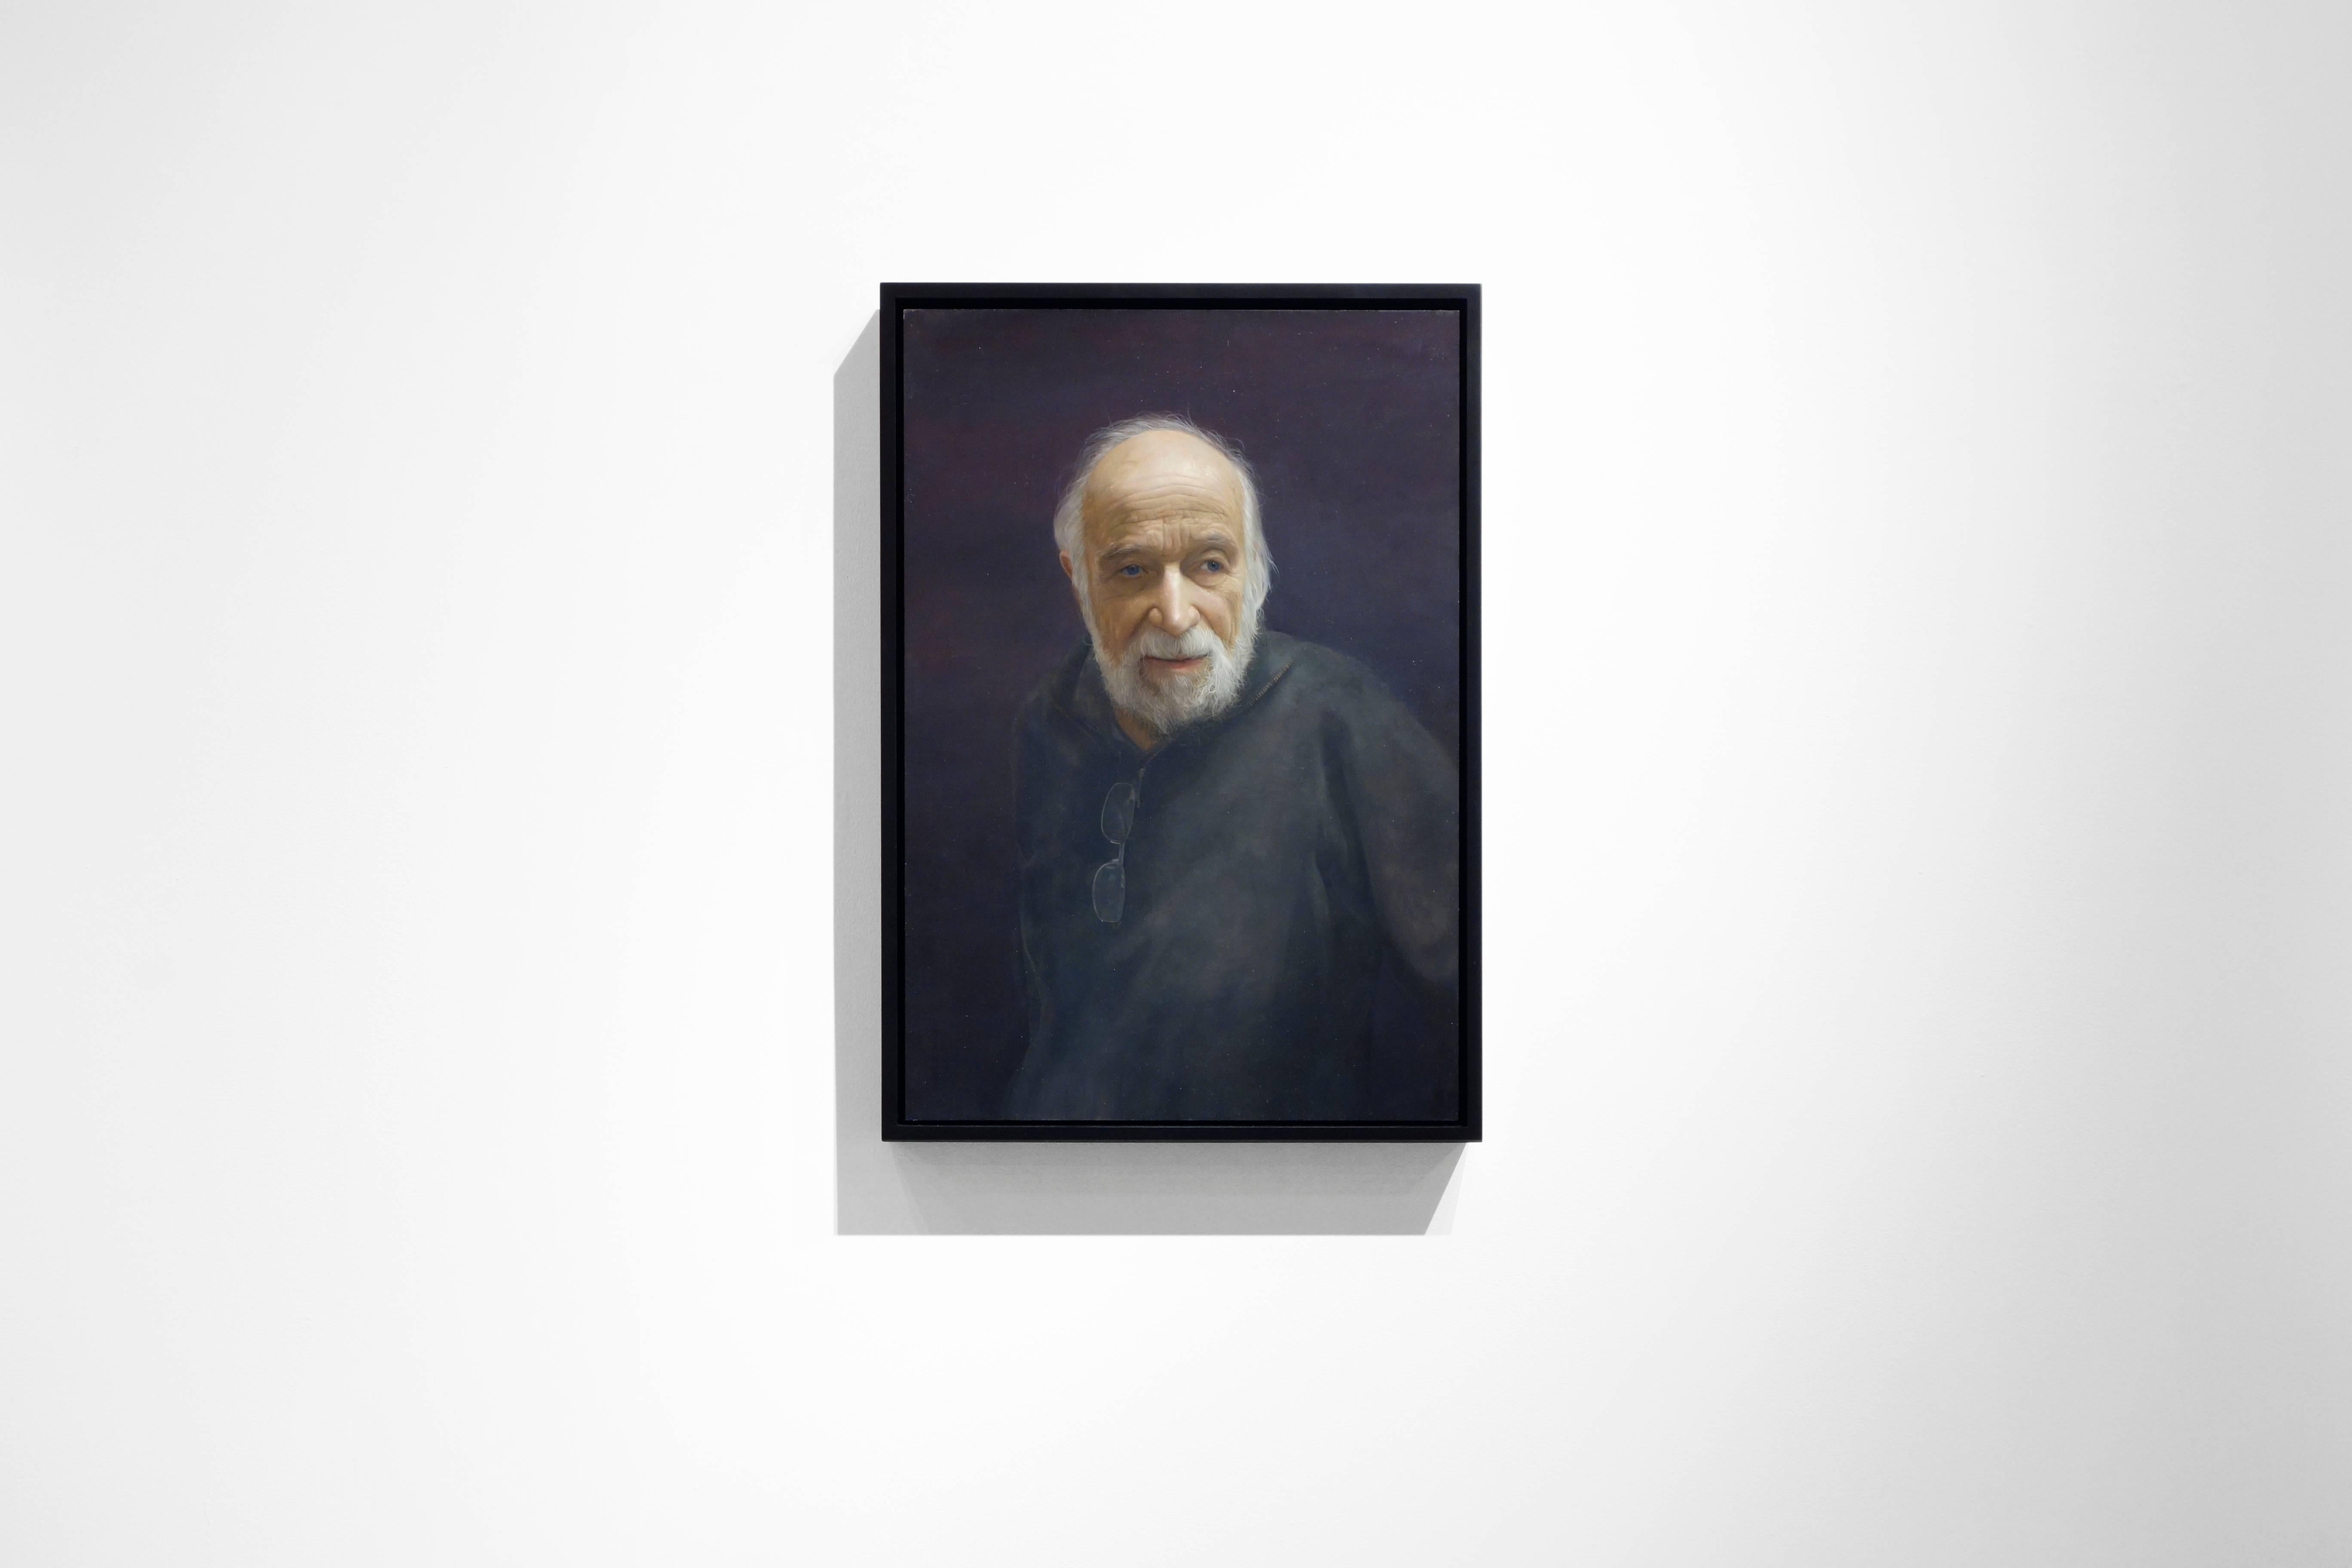 BURTON SILVERMAN, portrait of man, black sweater, portrait, photo-realism - Painting by David Kassan